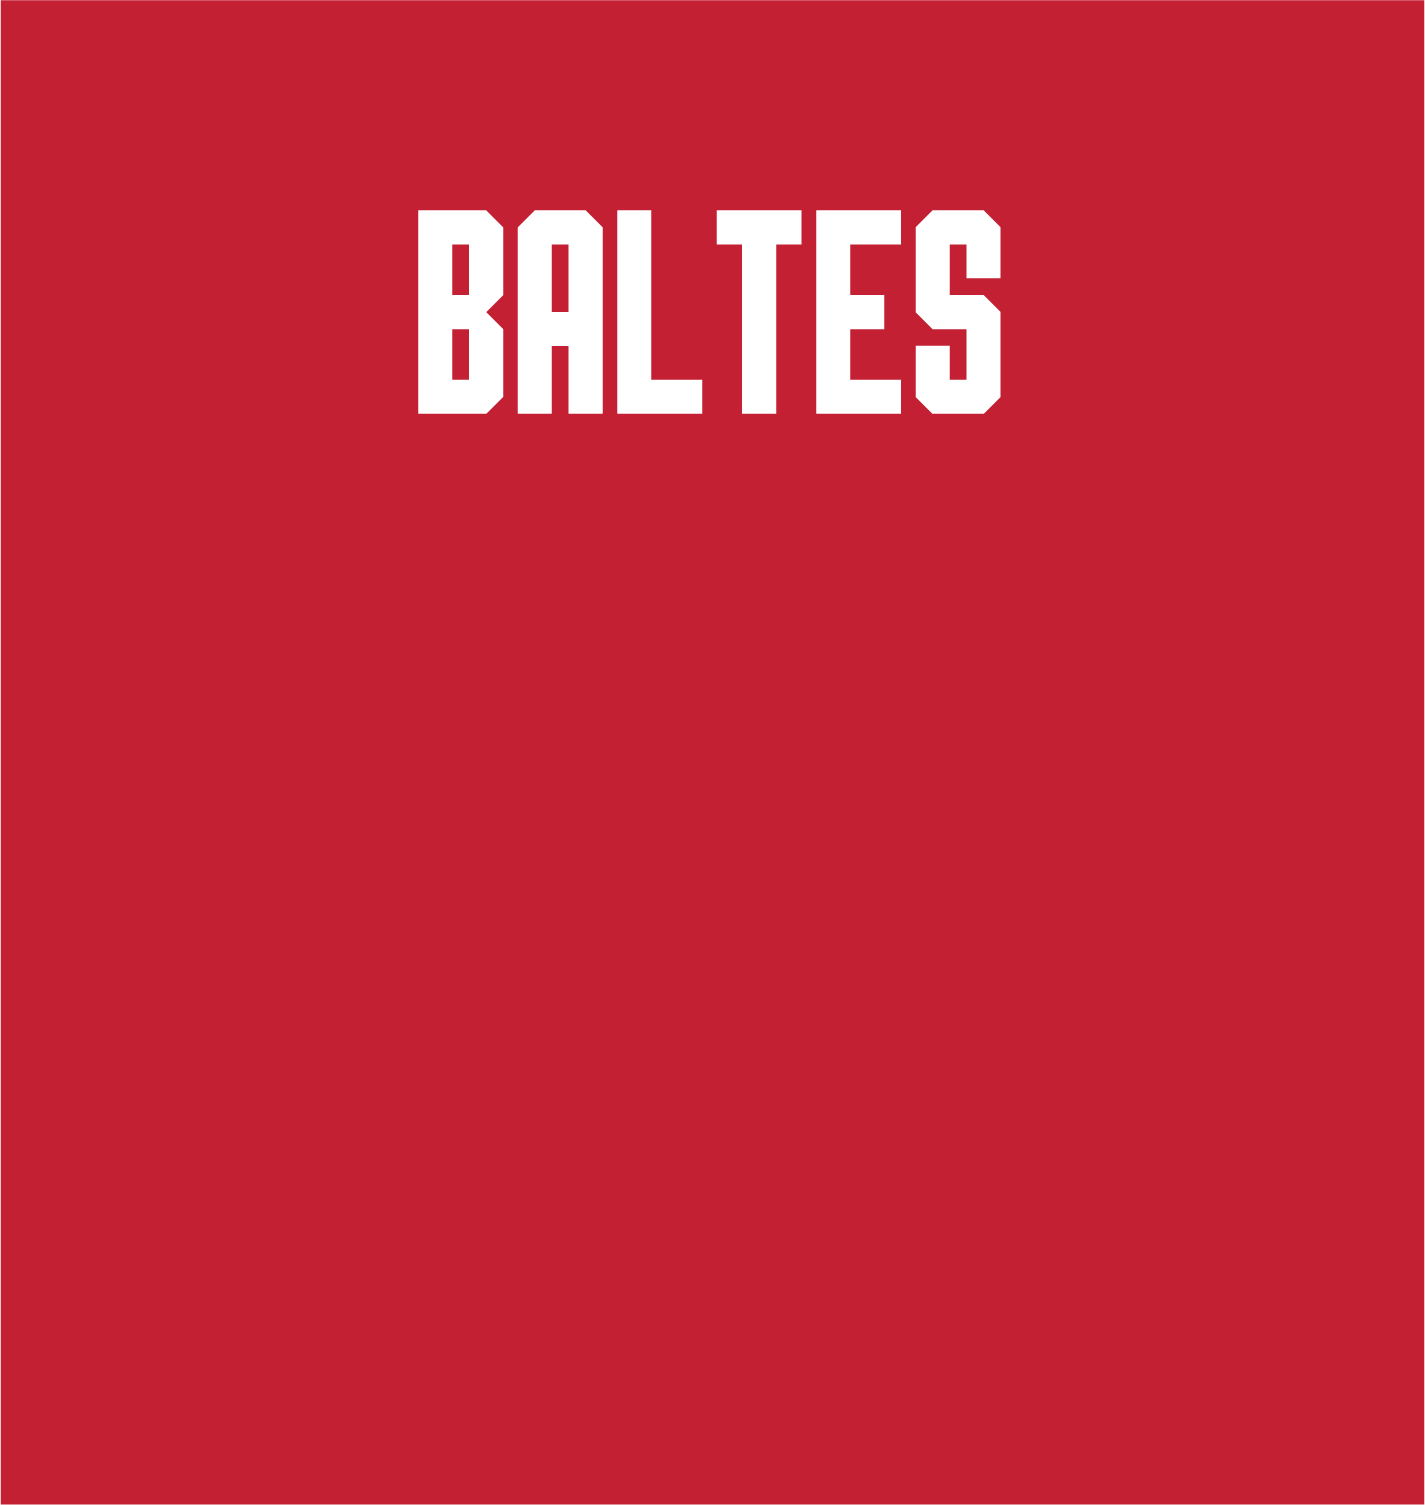 Daniel Baltes